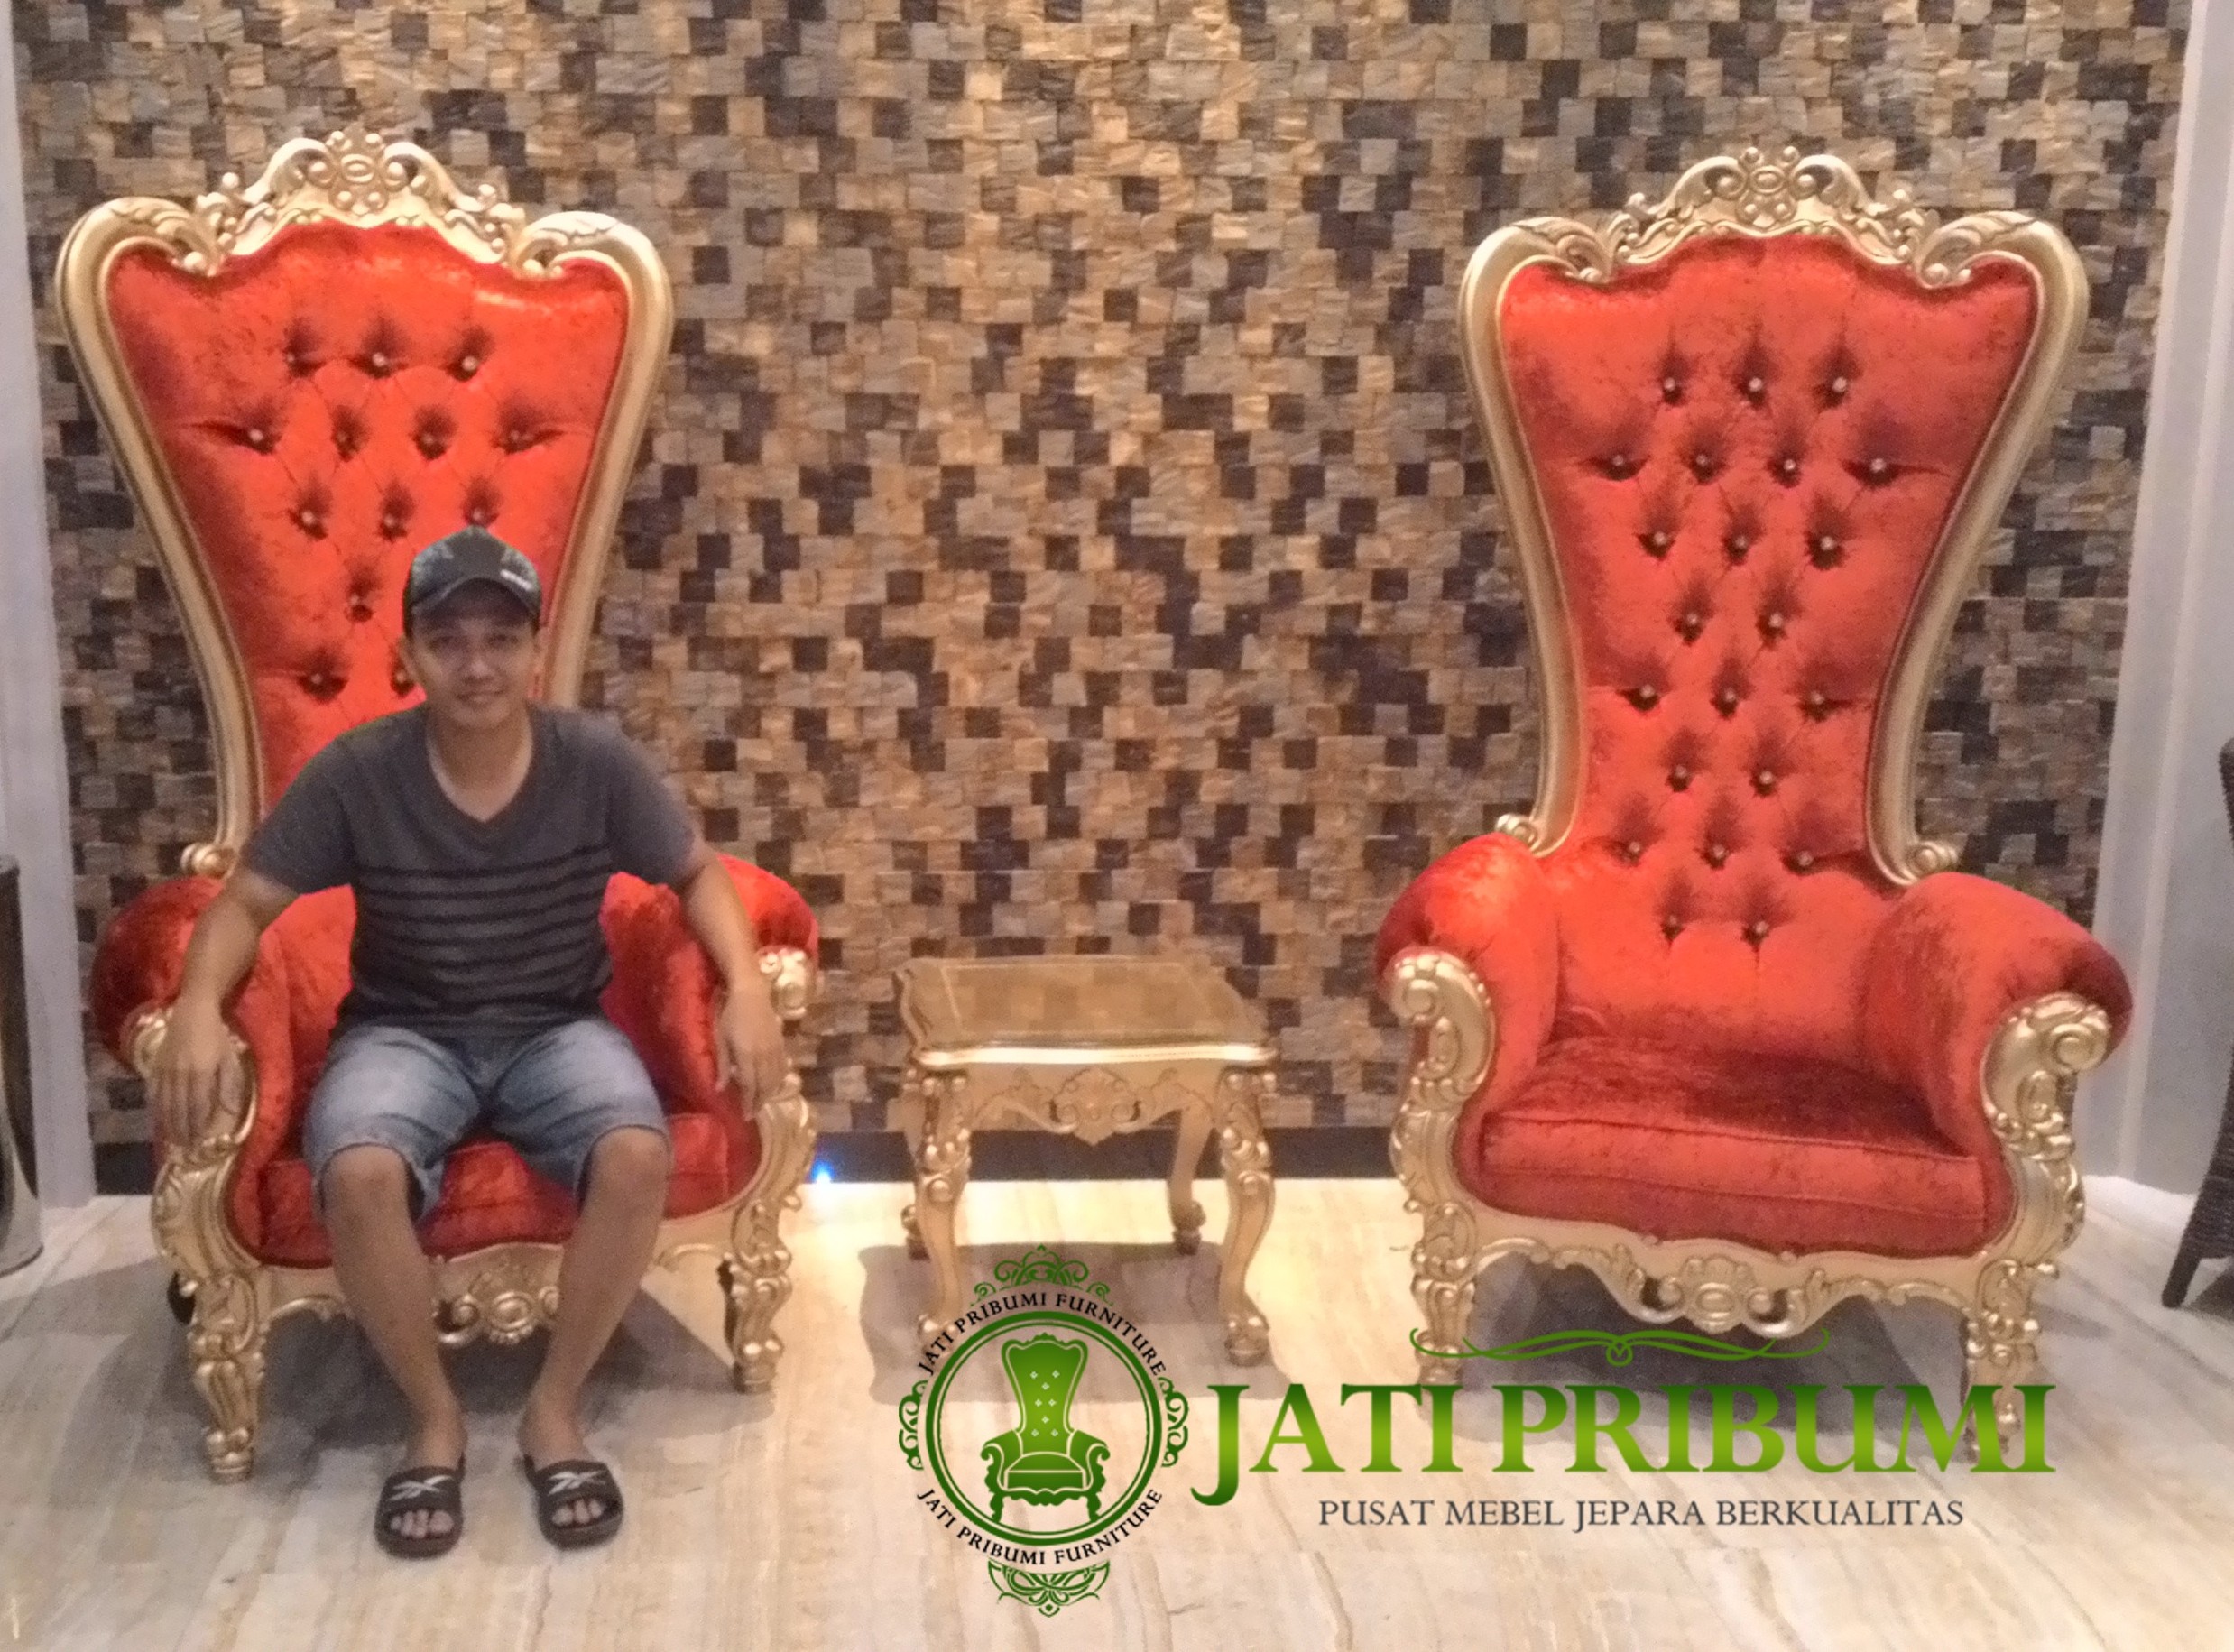 owner Jati Pribumi Furniture